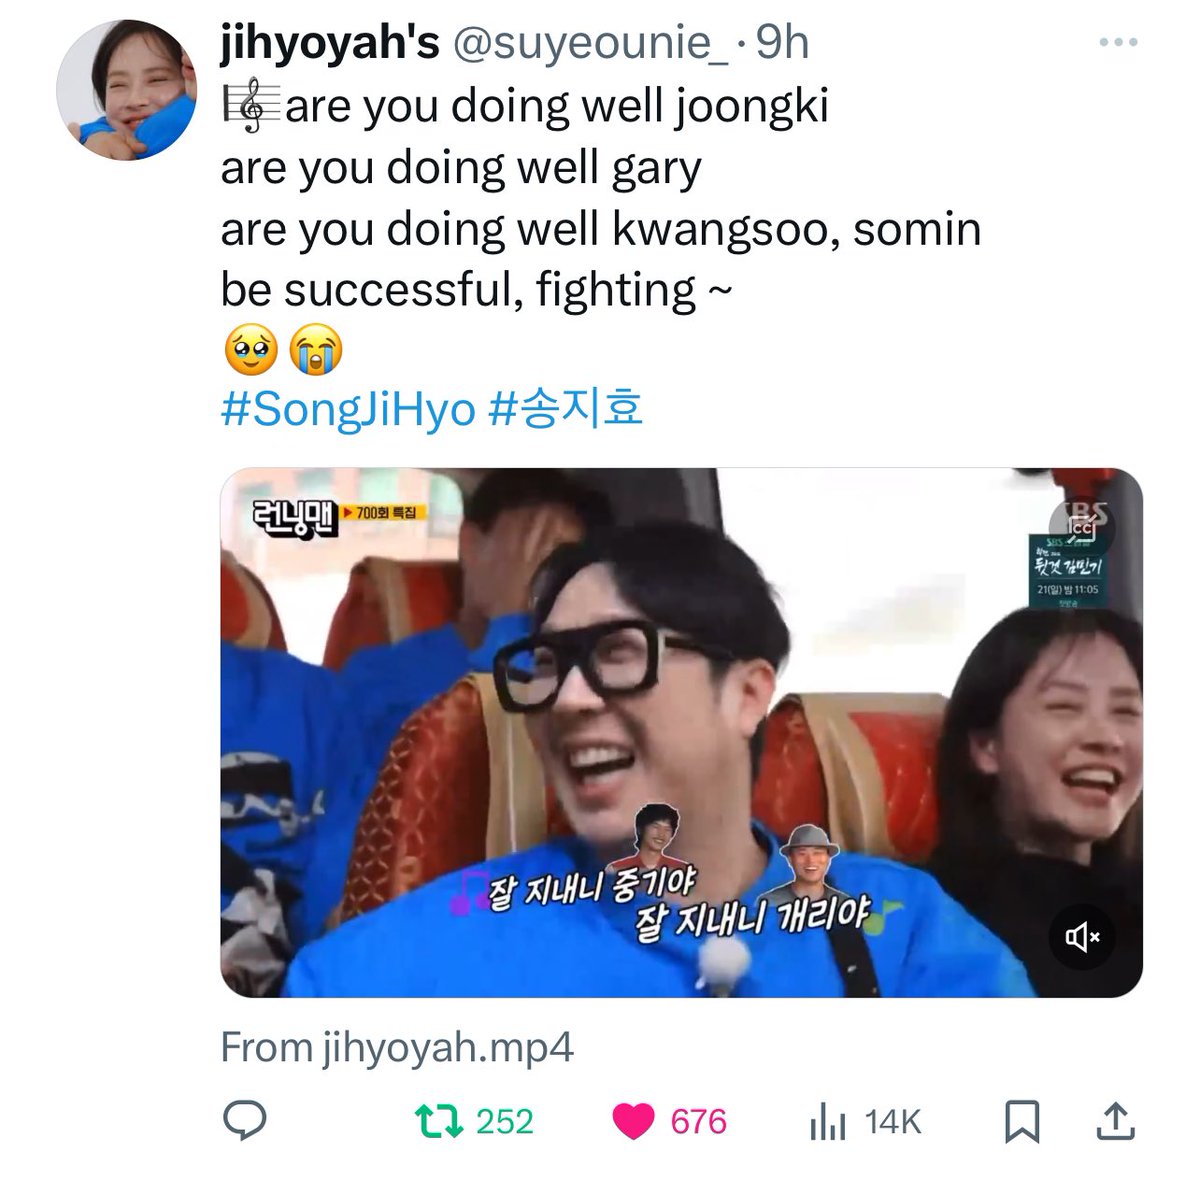 #RunningMan family mentioned #SongJoongKi again! This time, 'JoongKi are you doing well?' 🥲💙